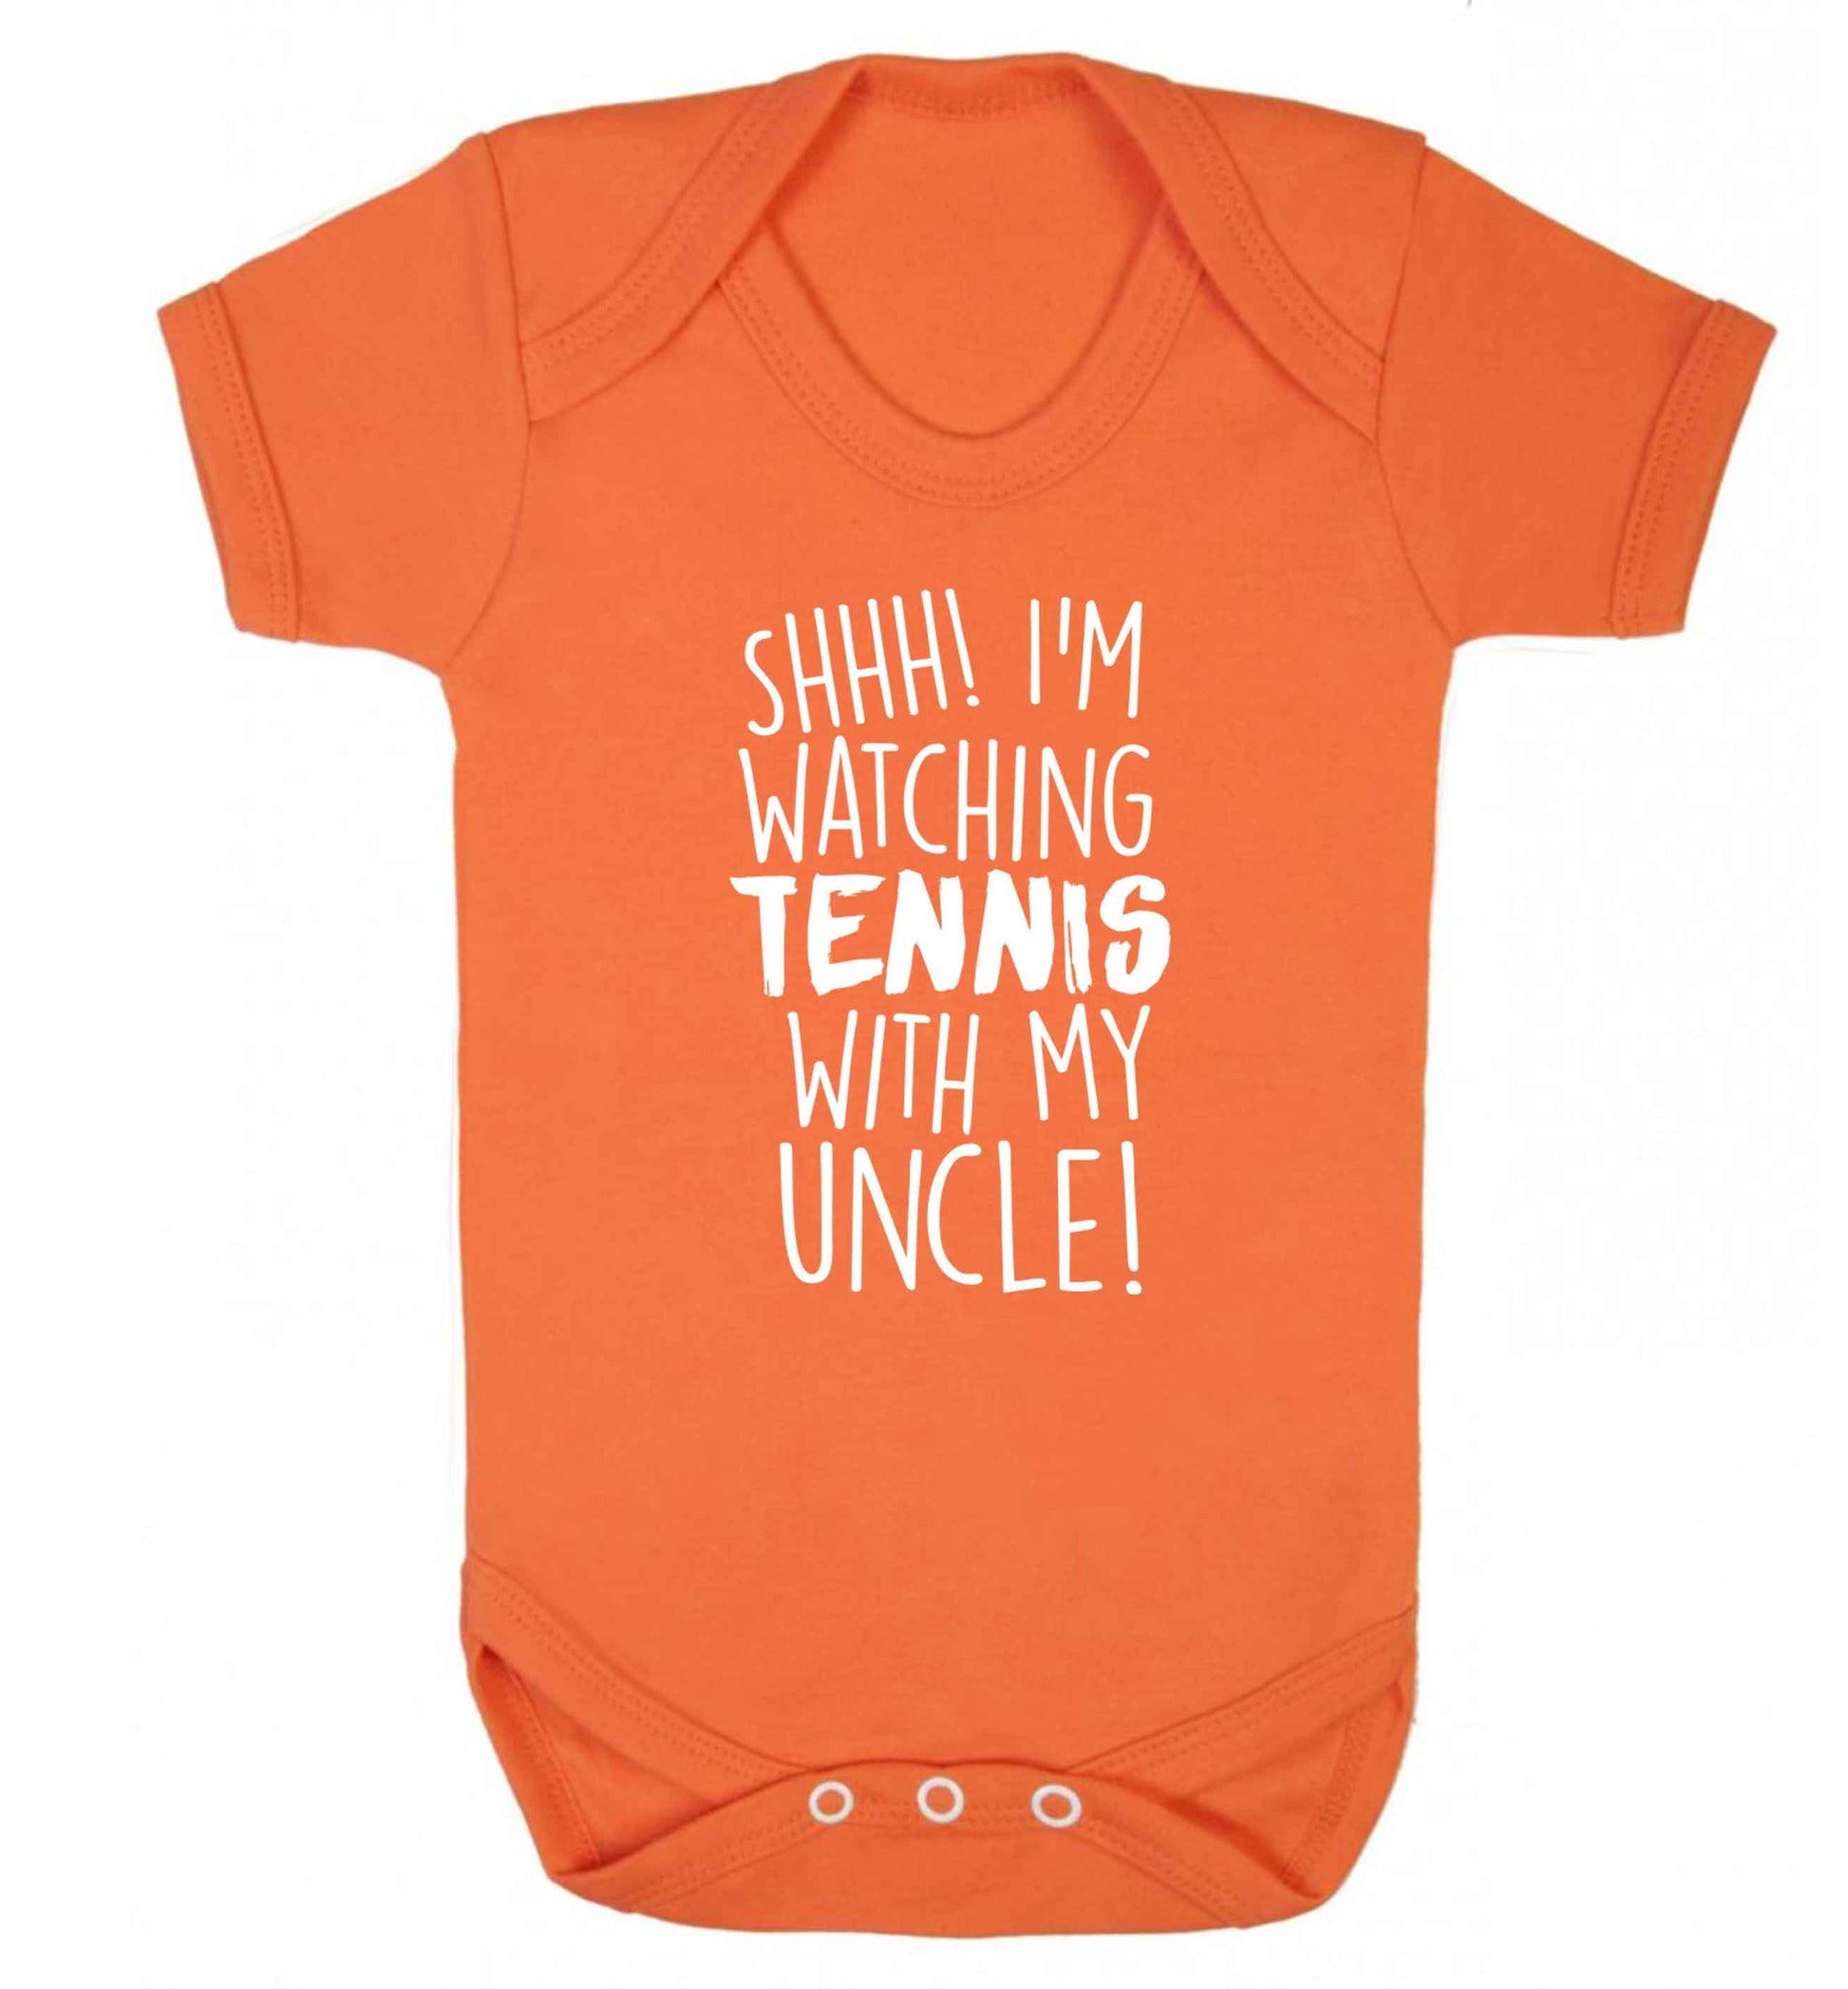 Shh! I'm watching tennis with my uncle! Baby Vest orange 18-24 months